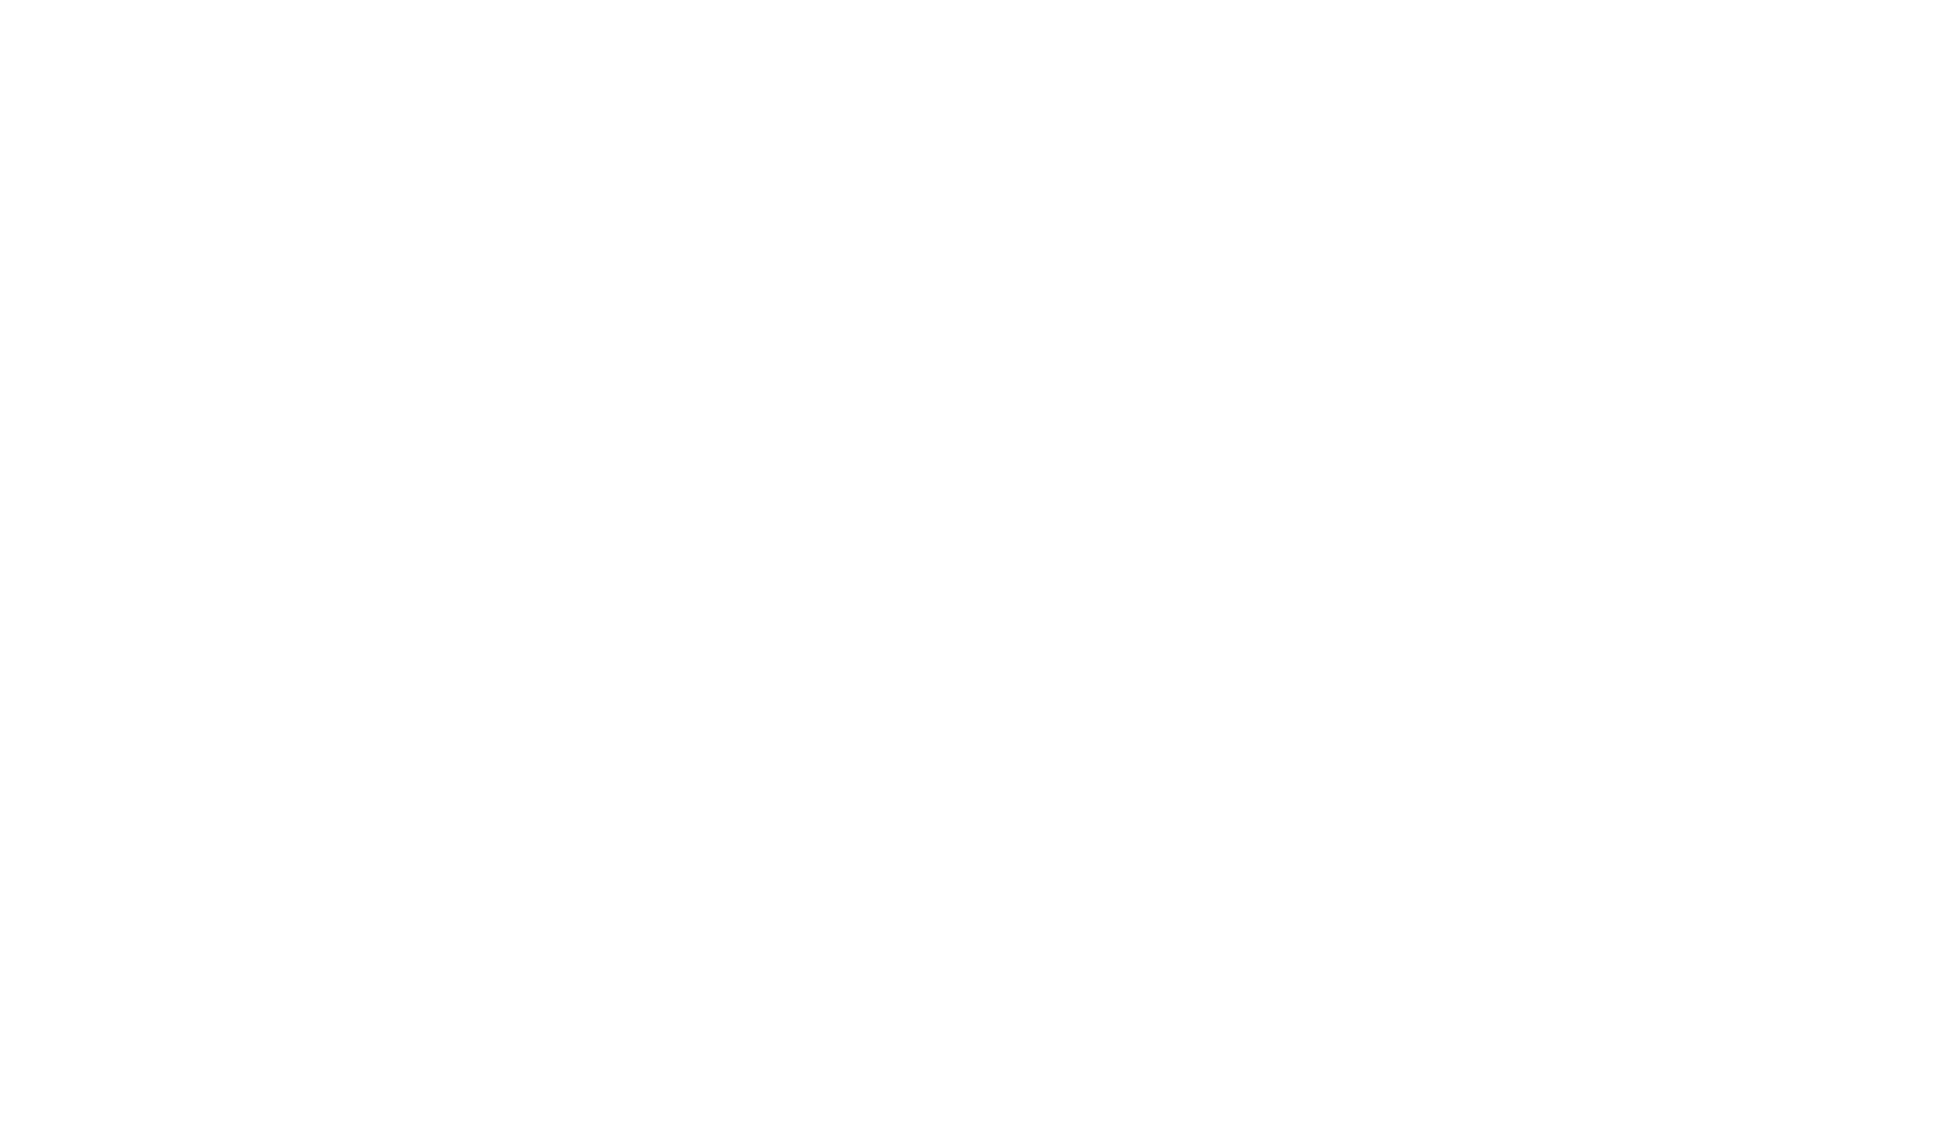 Jplay_Certified-02